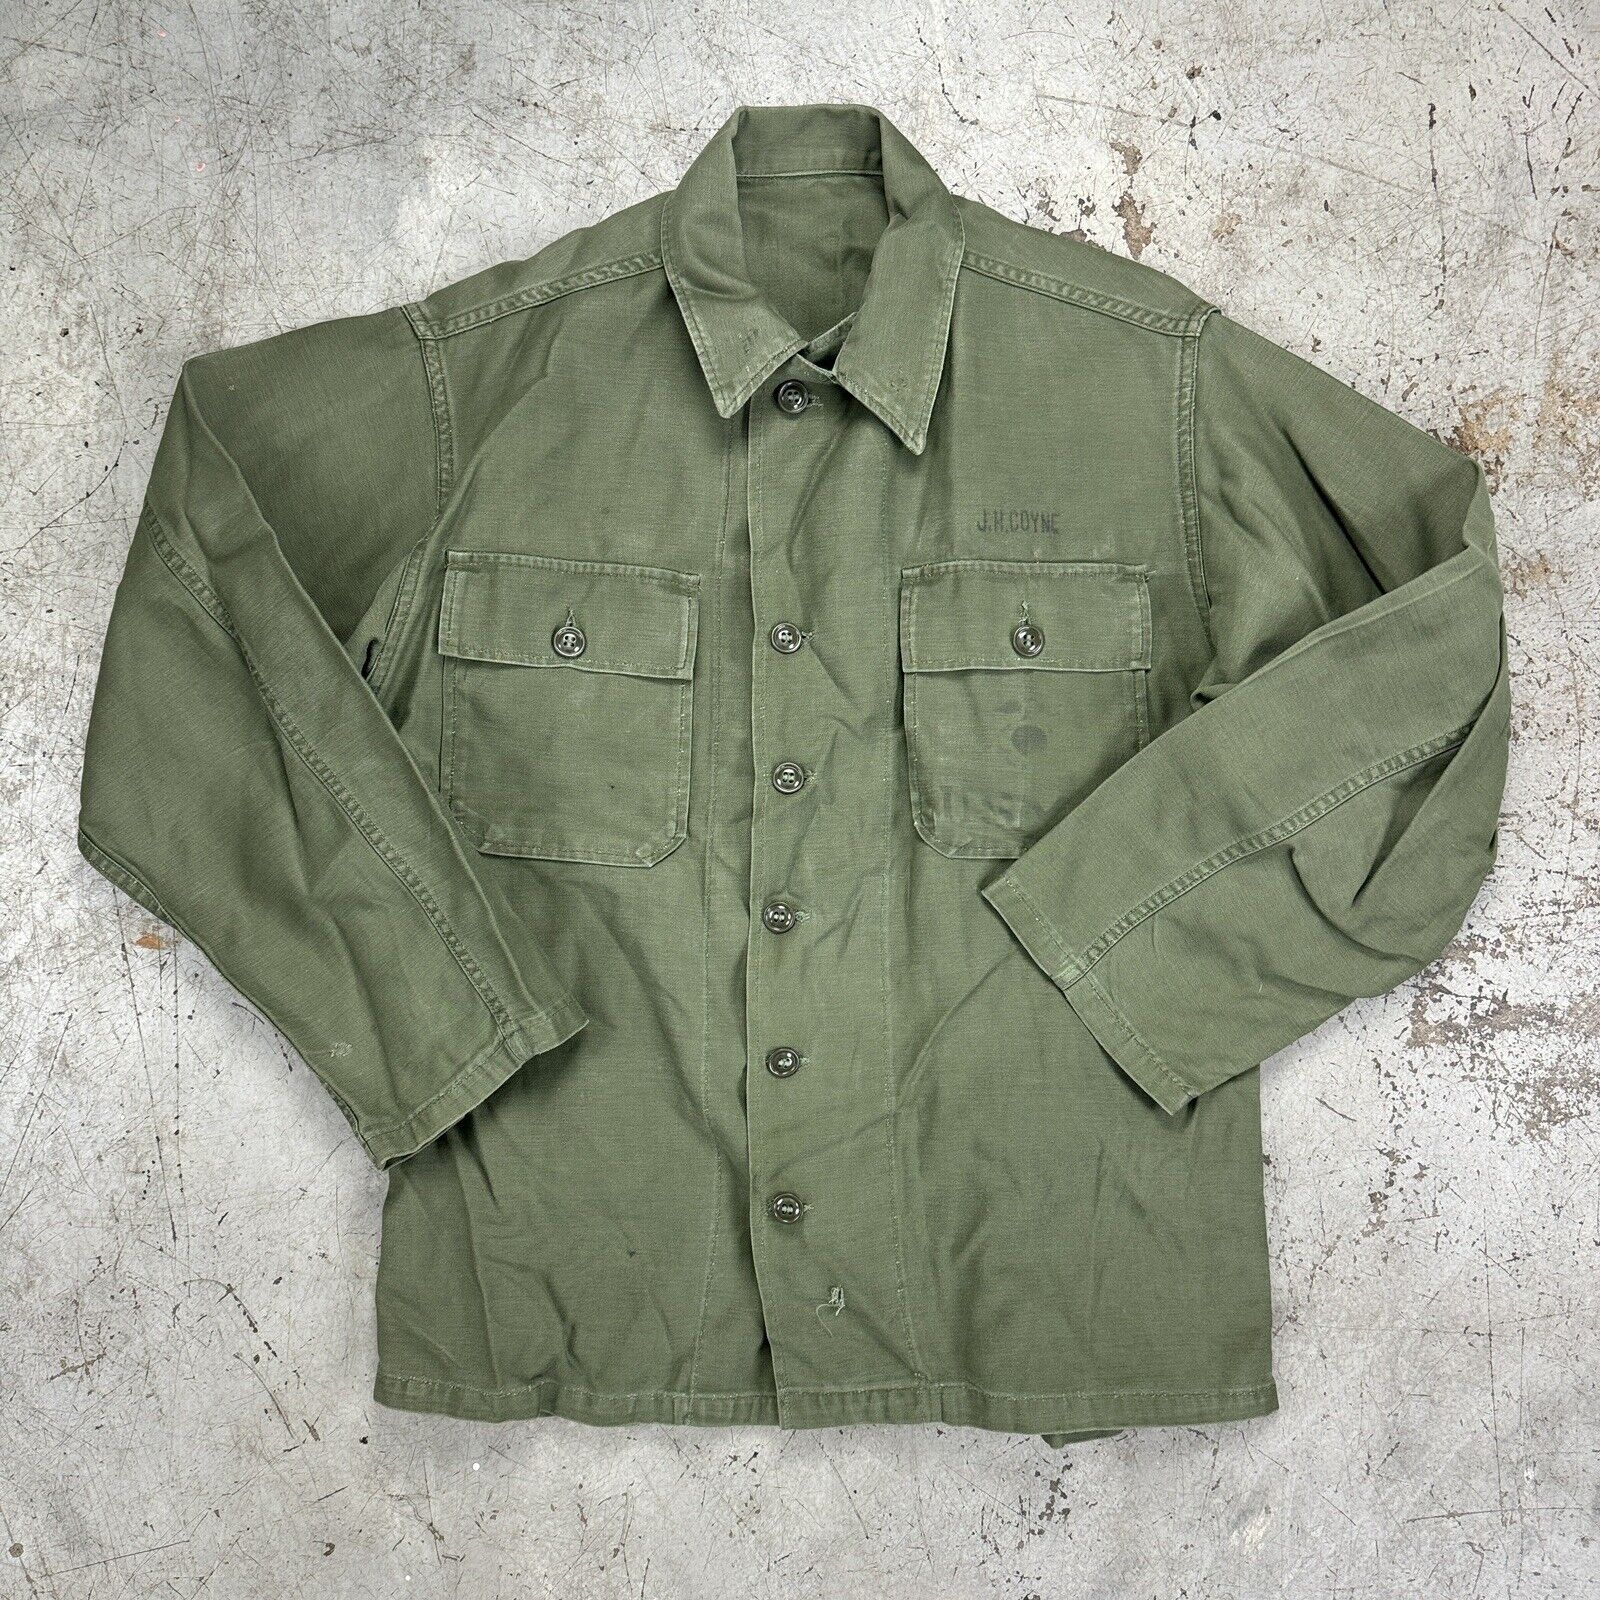 USMC Cotton Utility Field Shirt OG107 1st Pattern 50s 60s Vtg Vietnam Large